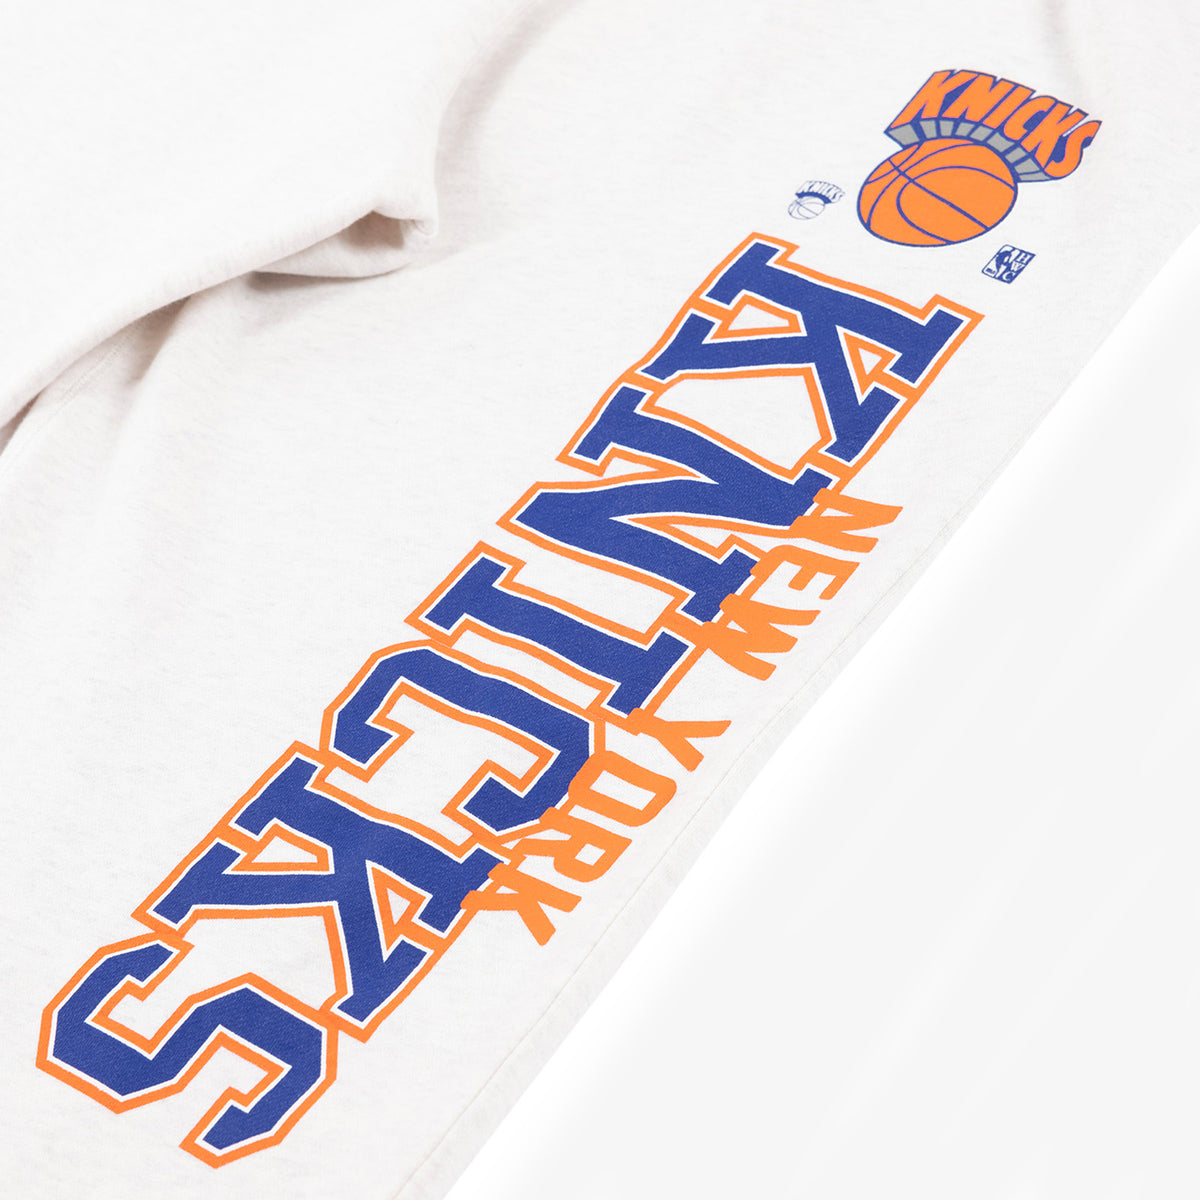 New York Knicks Lay Up Sweatpants - White Marle